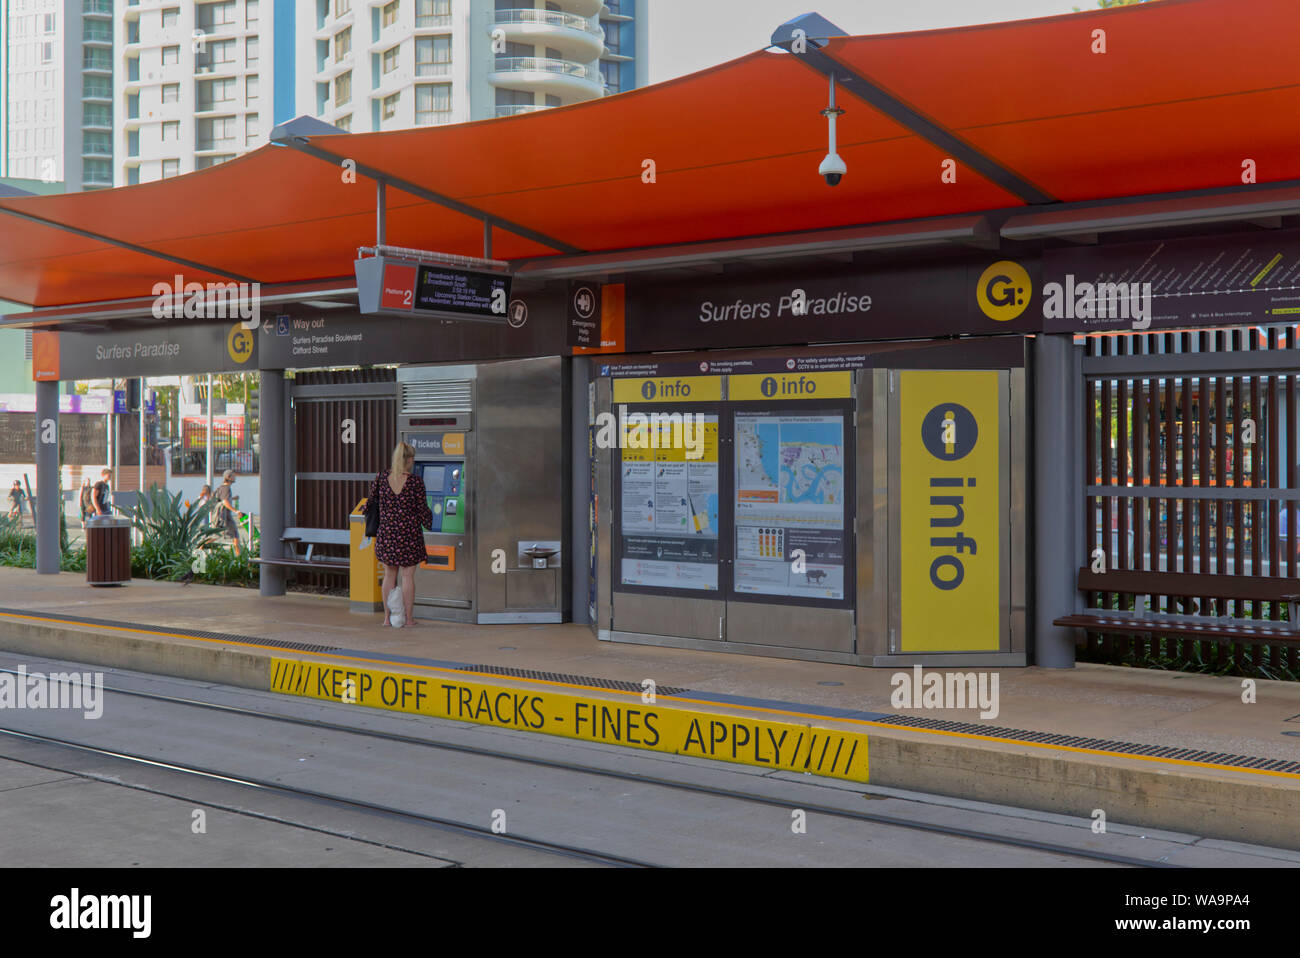 Stazione per il G Link light rail - Il tram a Surfers Paradise Gold Coast di Queensland in Australia Foto Stock